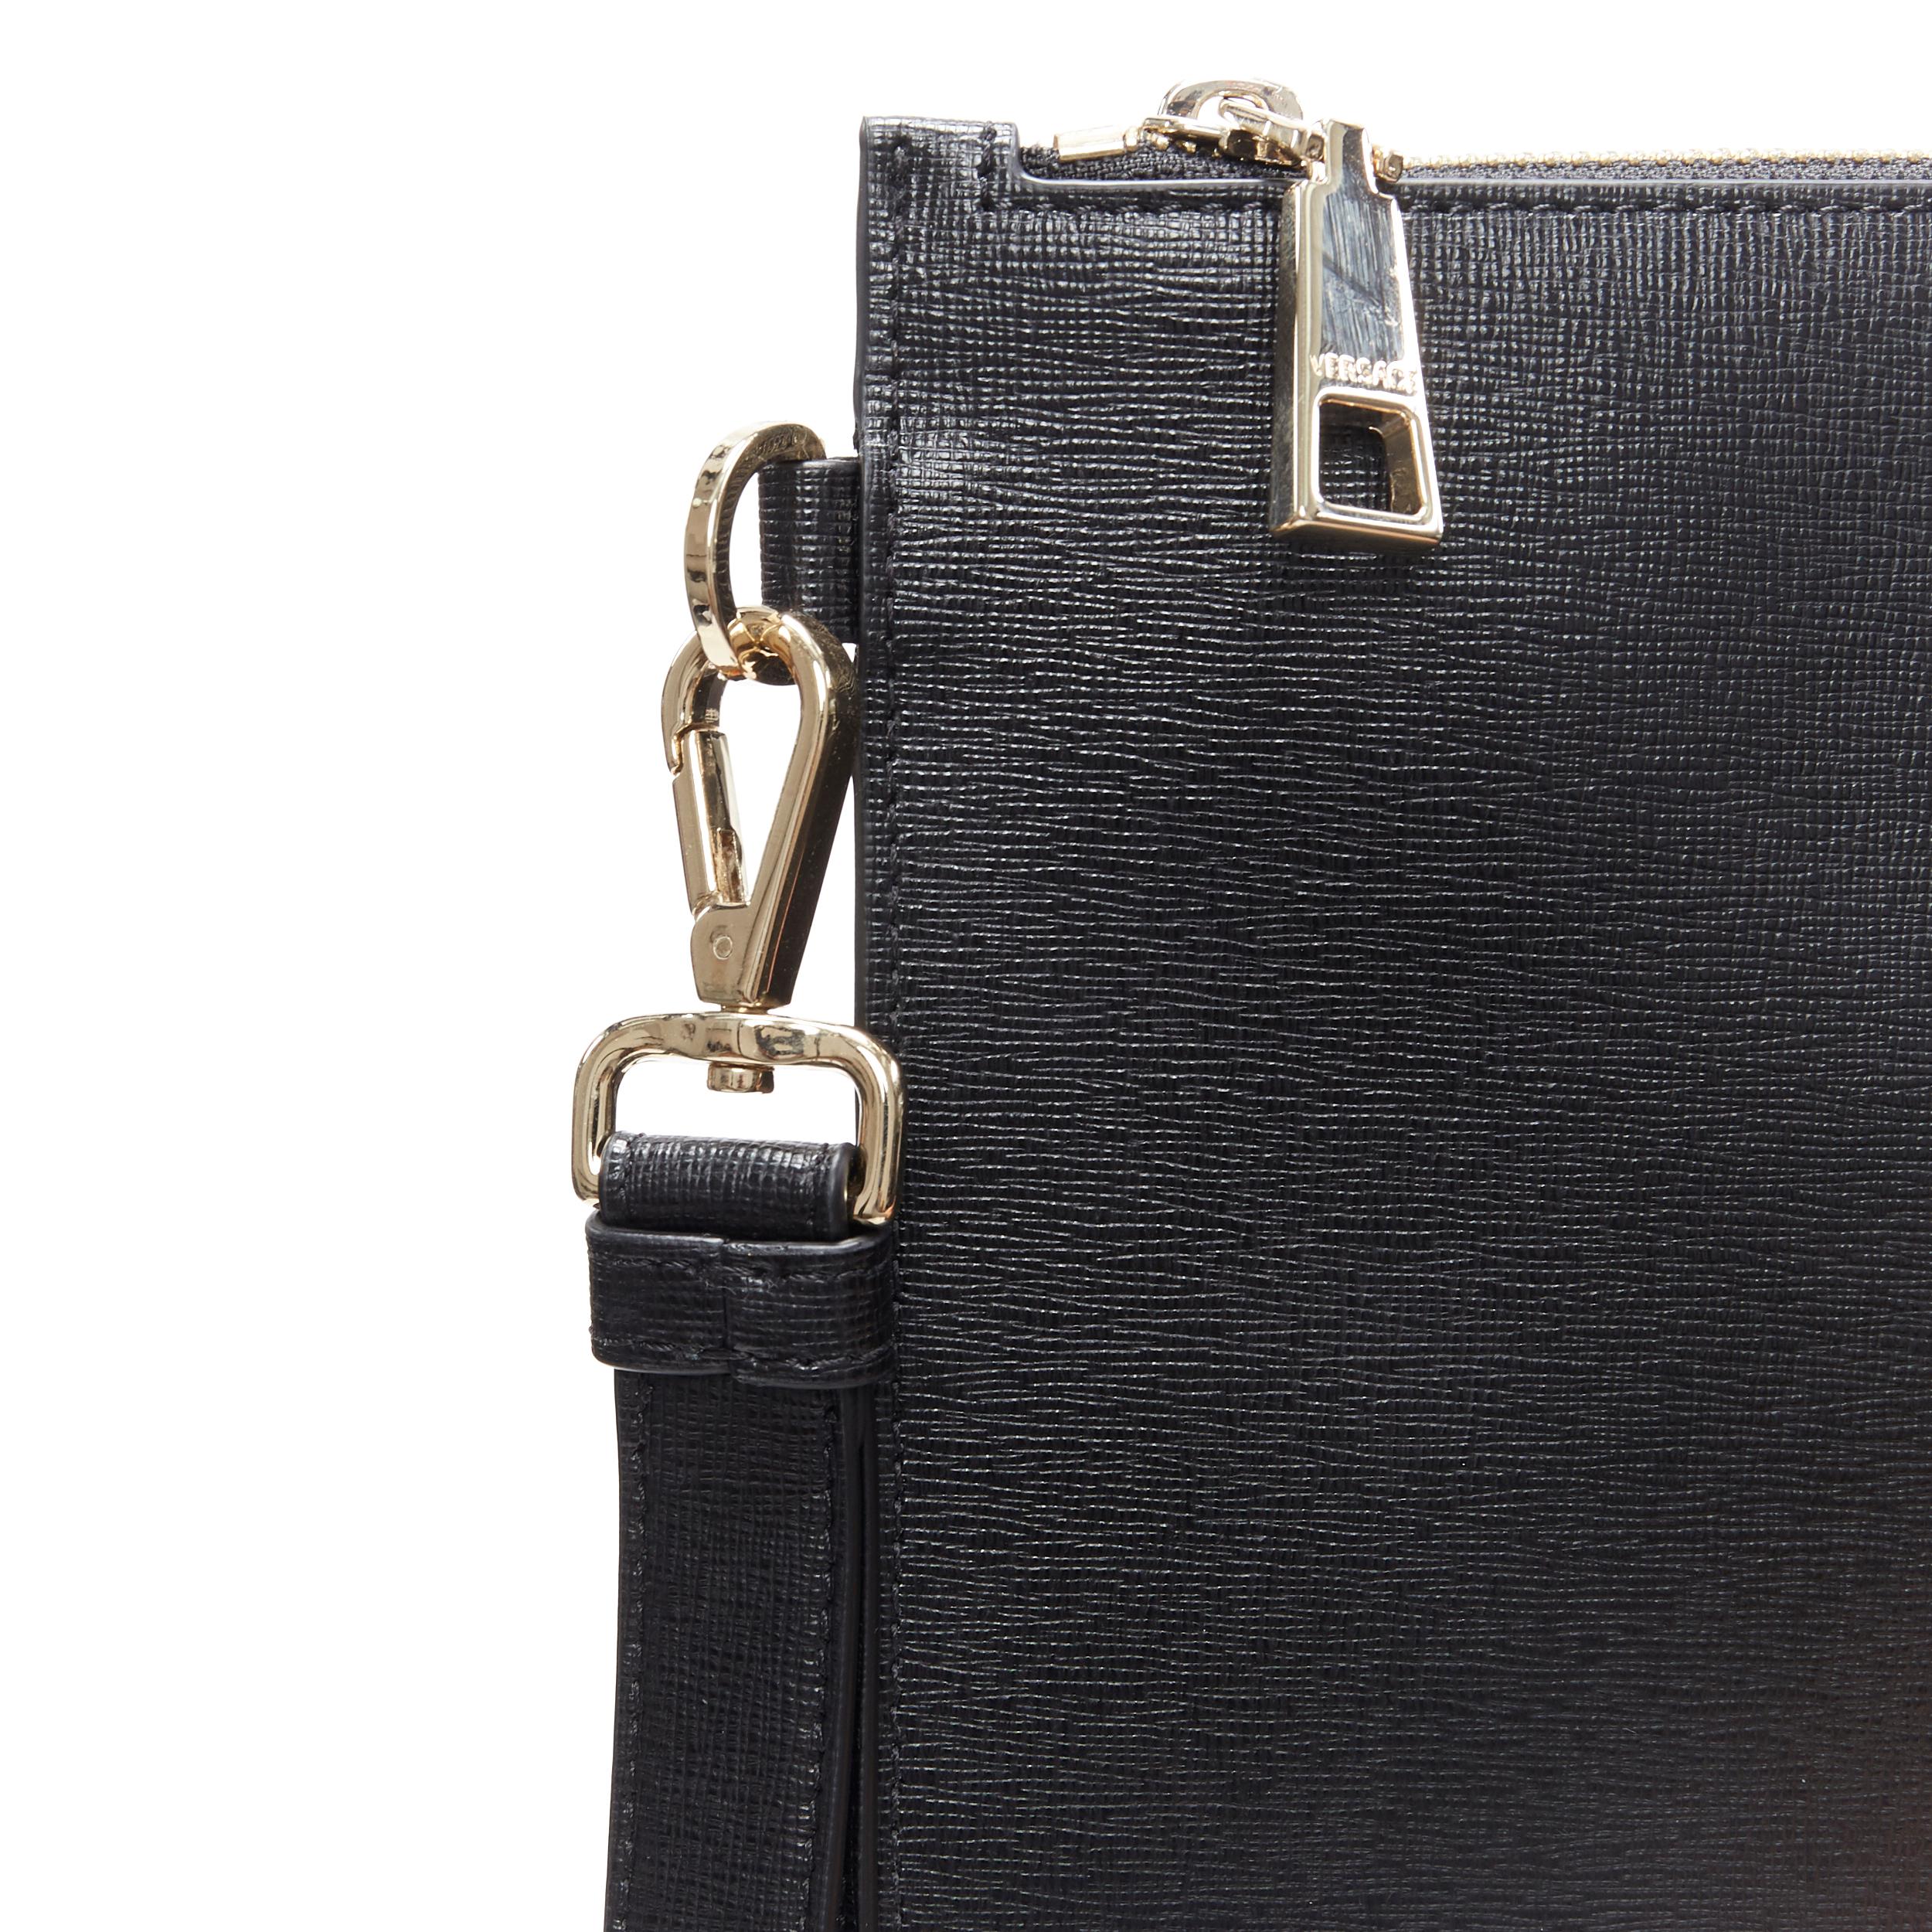 Women's new VERSACE Palazzo Medusa black saffiano calf leather wristlet pouch clutch bag